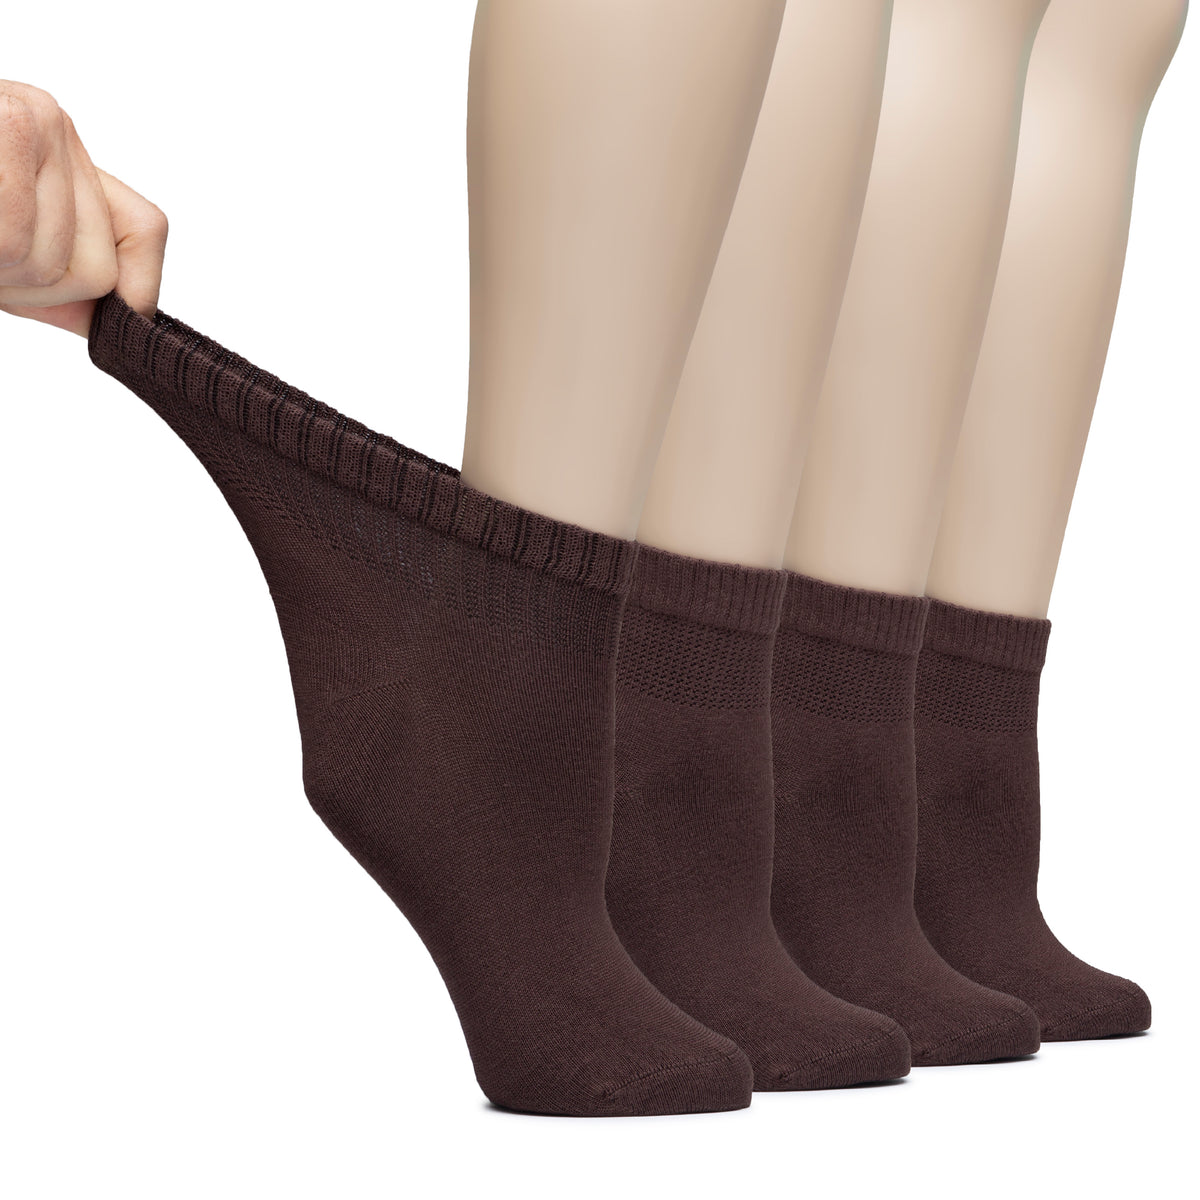 Hugh Ugoli Lightweight Women's Diabetic Ankle Socks Bamboo Thin Socks Seamless Toe and Non-Binding Top, 4 Pairs, , Shoe Size: 6-9/10-12 | Shoe Size: 10-12 | Brown